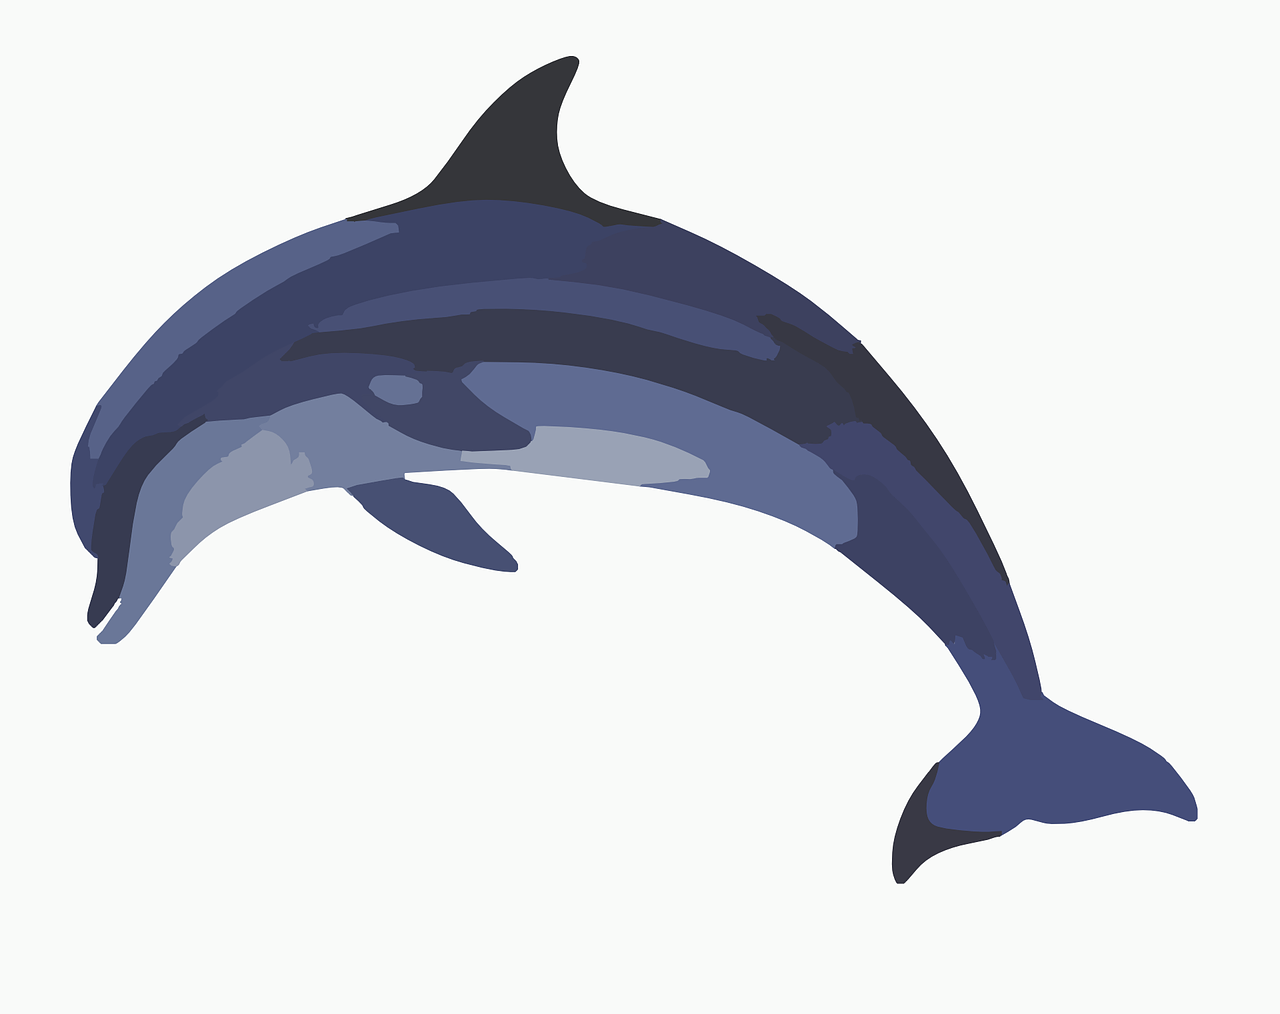 dolphin mammal animal free photo